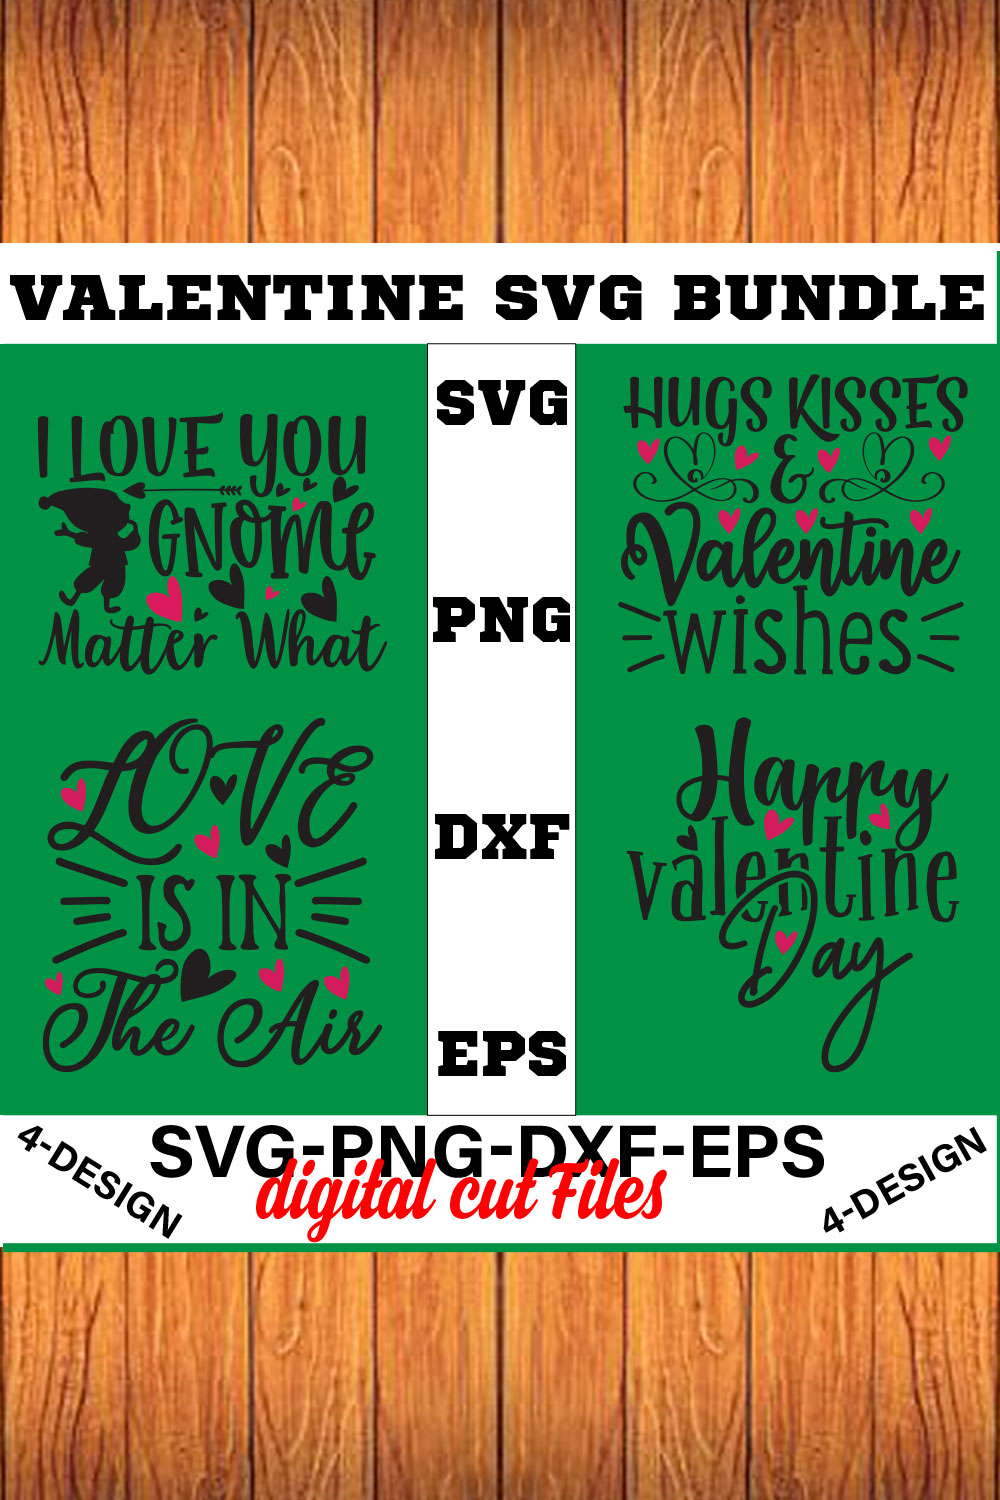 Valentines SVG Bundle, Valentine's Baby Shirts svg, Valentine Shirts svg, Cute Valentines svg, Heart Shirt svg, Love svg, Volume-04 pinterest preview image.